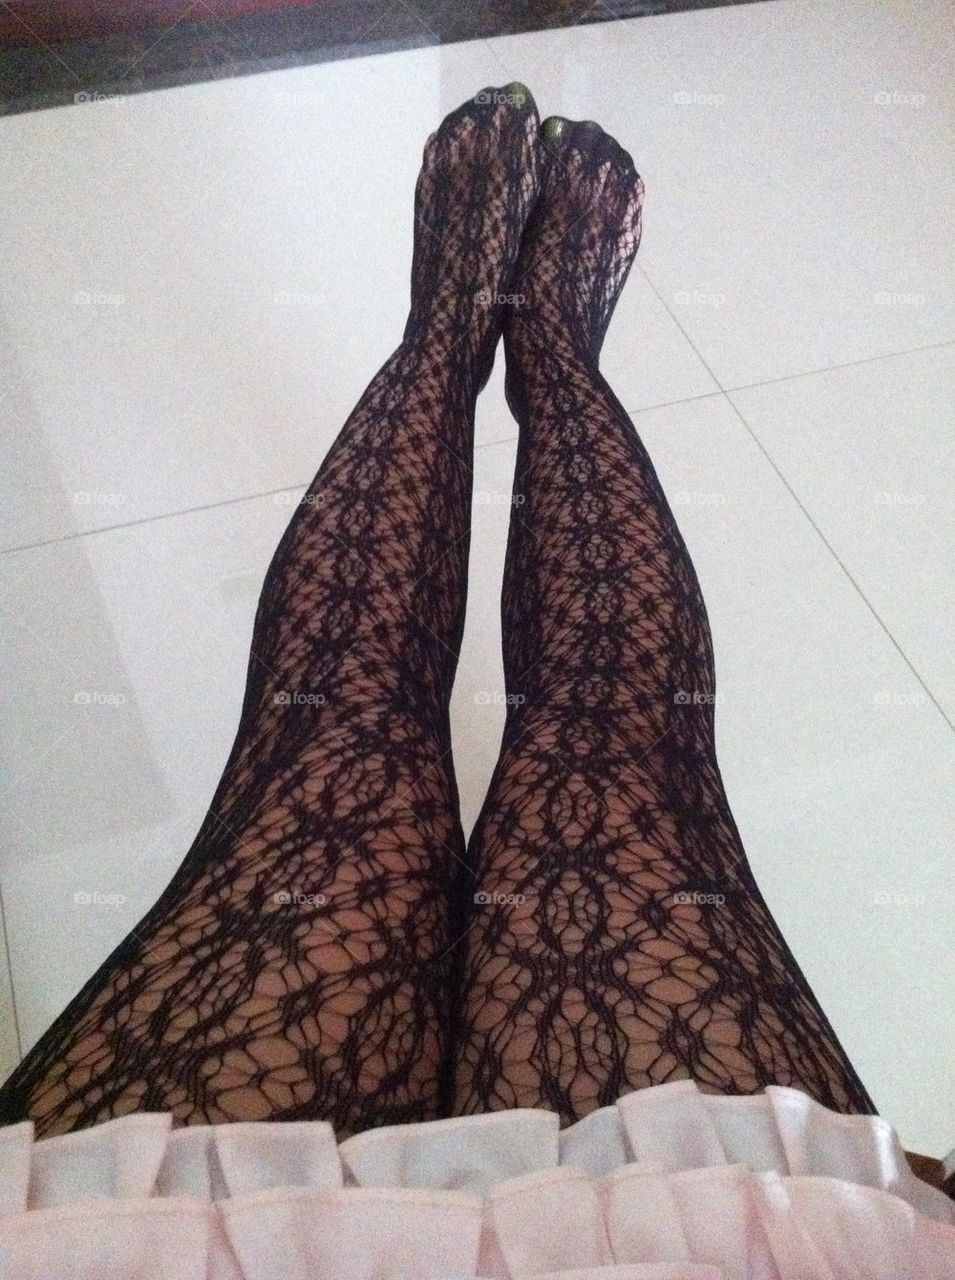 tights woman pattern legs by simplyhoney